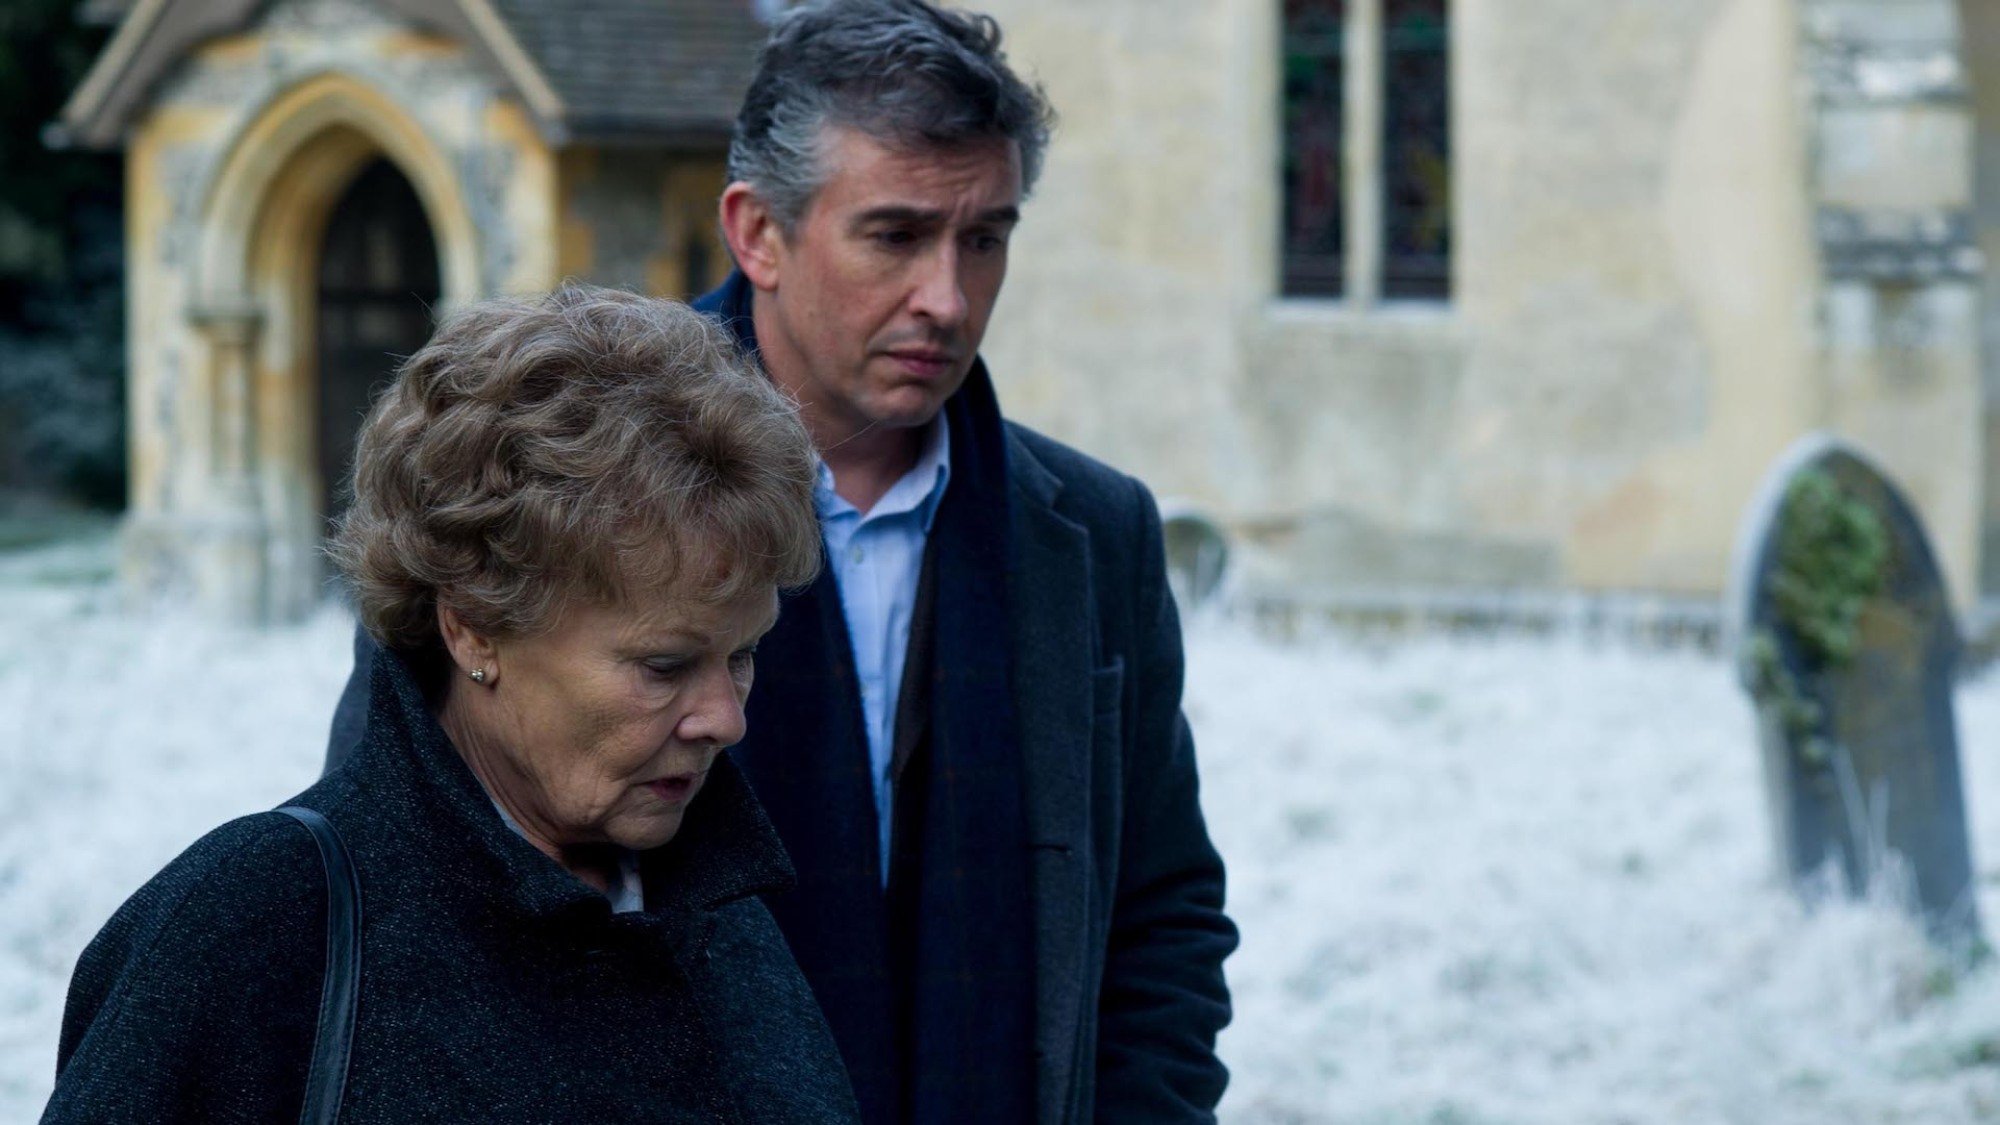 Judi Dench and Steve Coogan walk near a church in the film "Philomena"